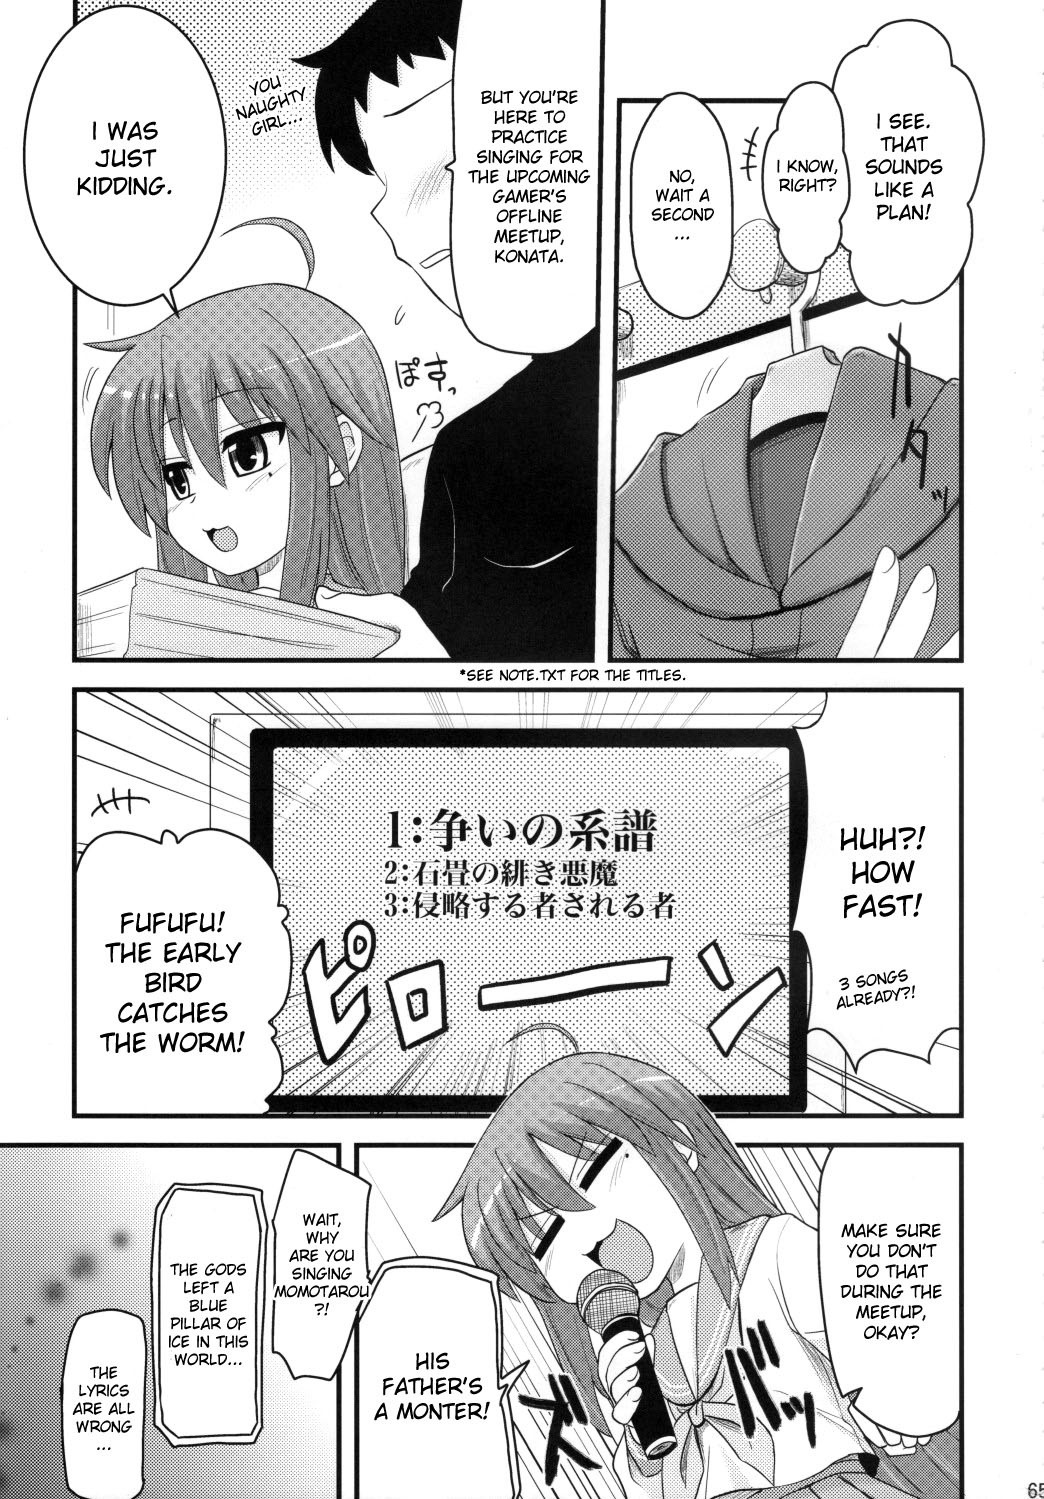 Konata and Oh-zu 4 people each and every one + 1 hentai manga picture 61